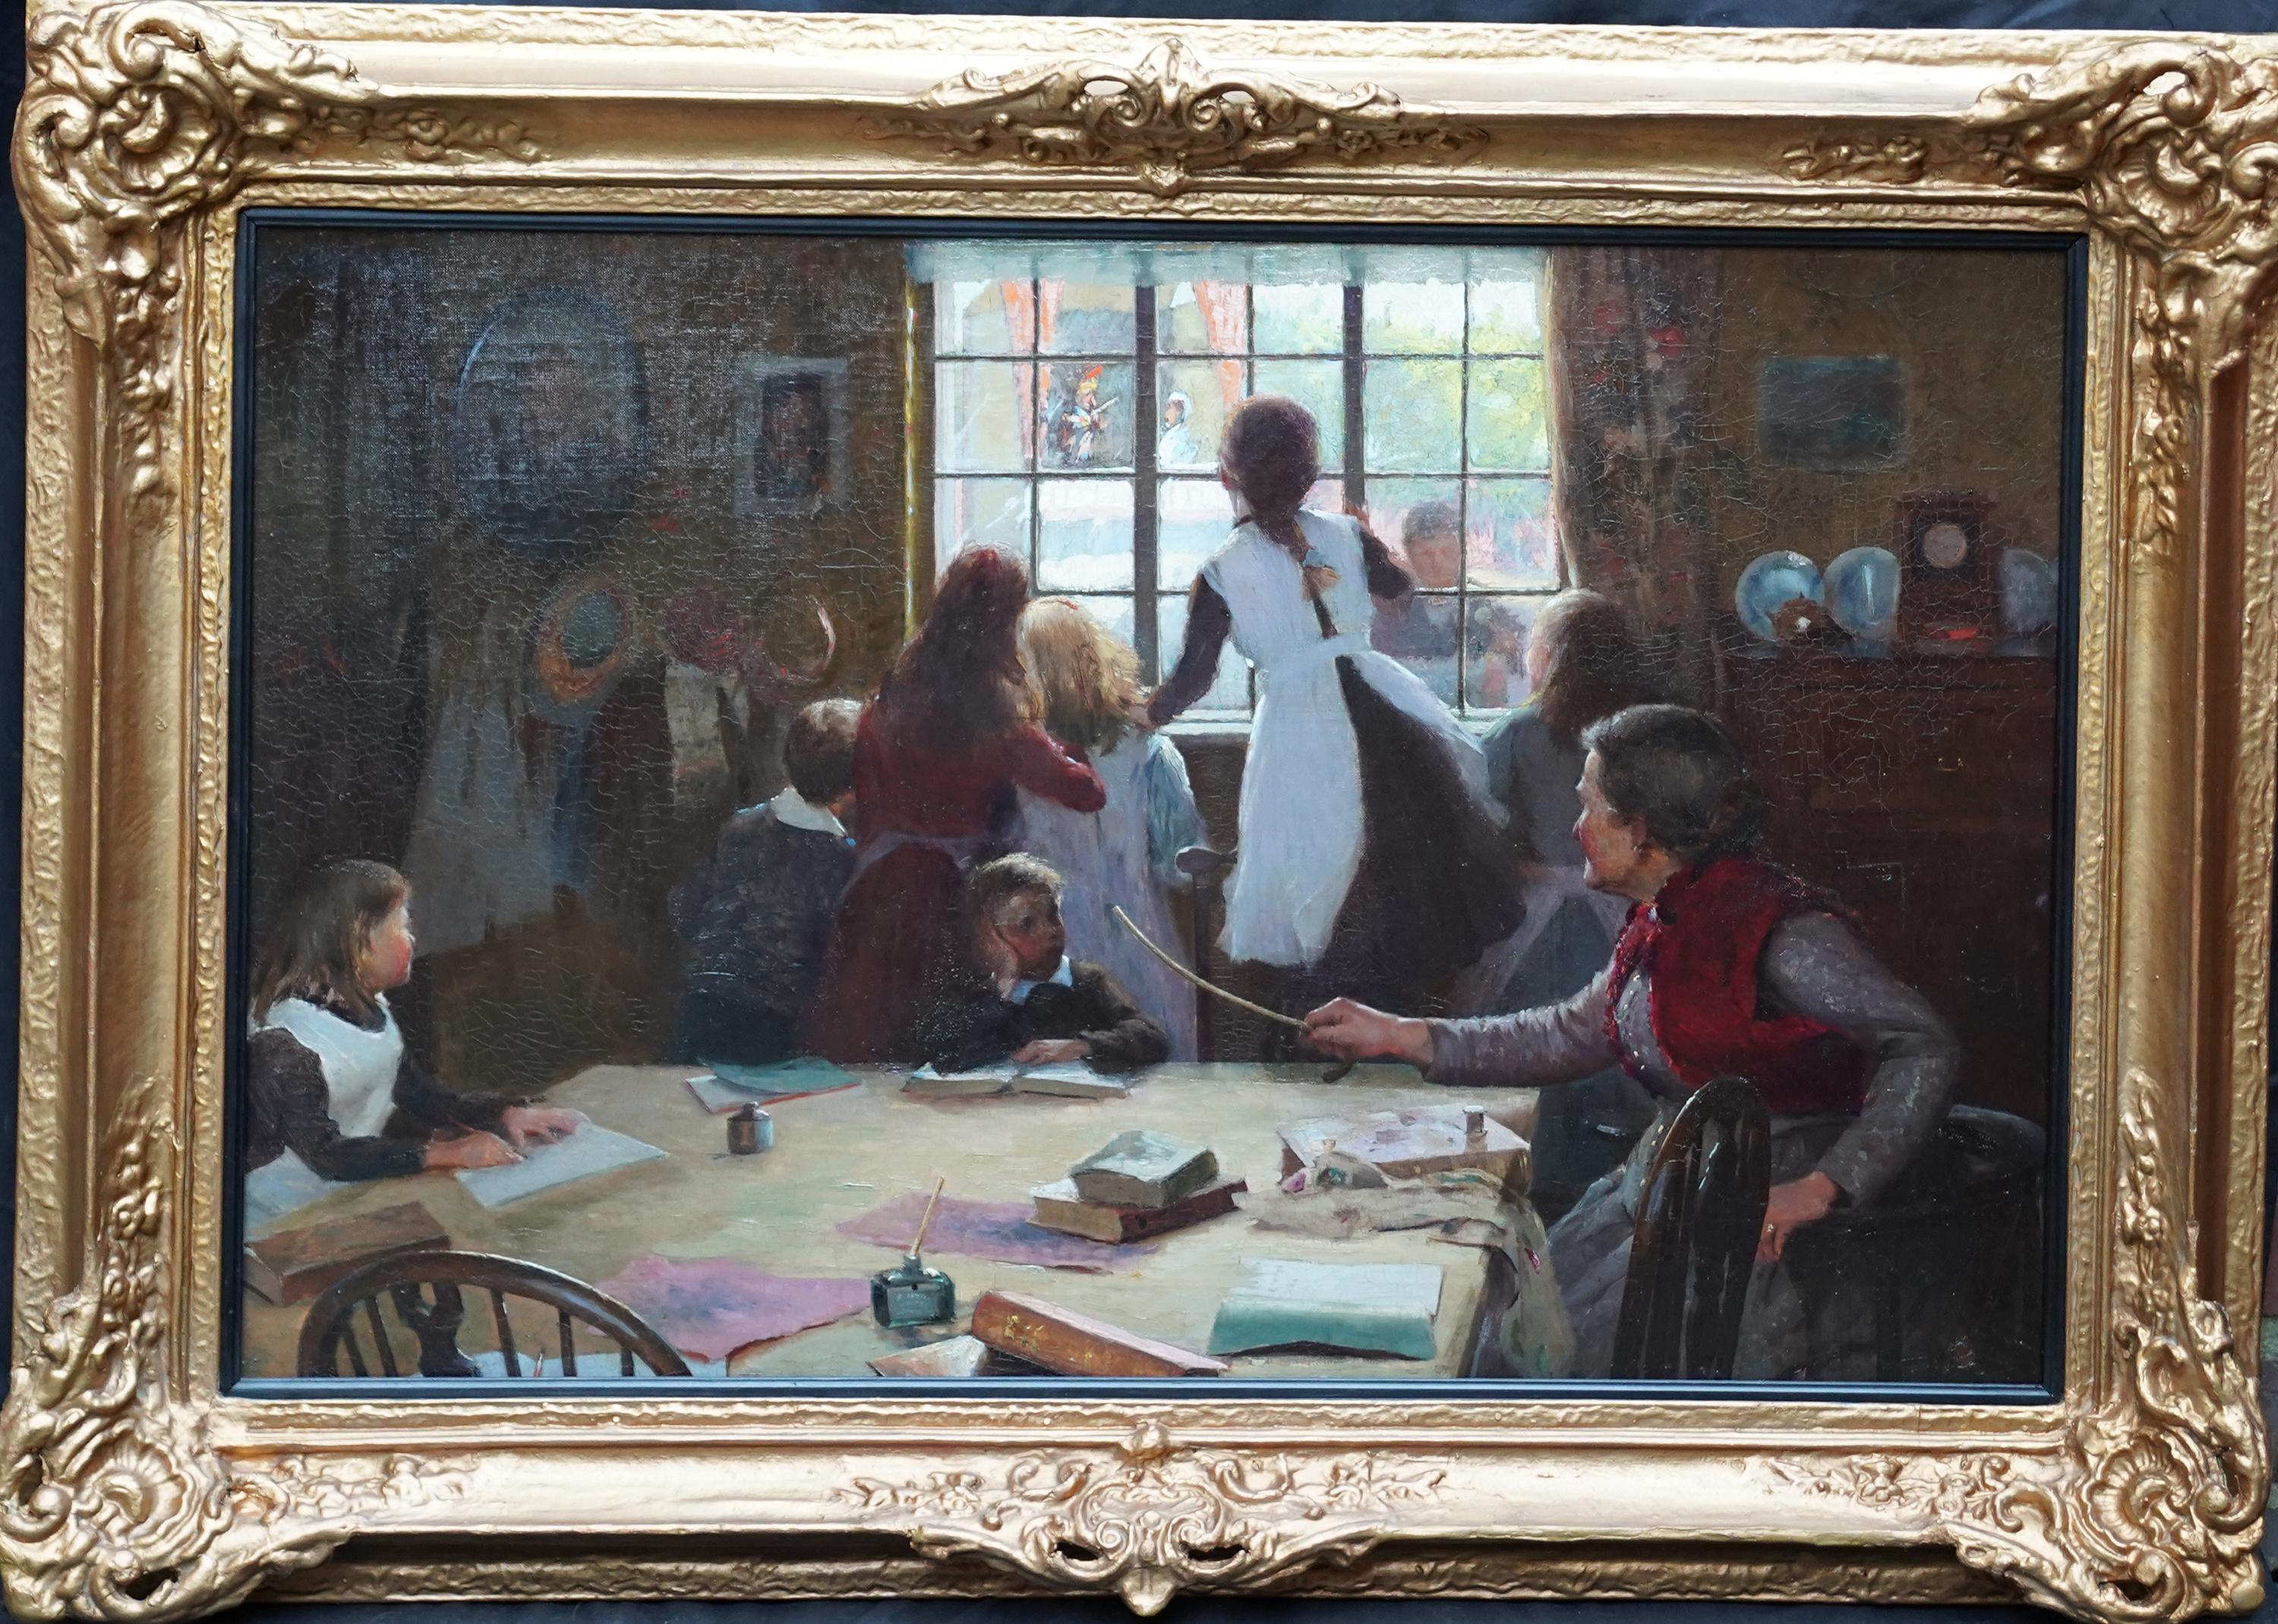 Children in School Room Interior - British Victorian Newlyn School oil painting